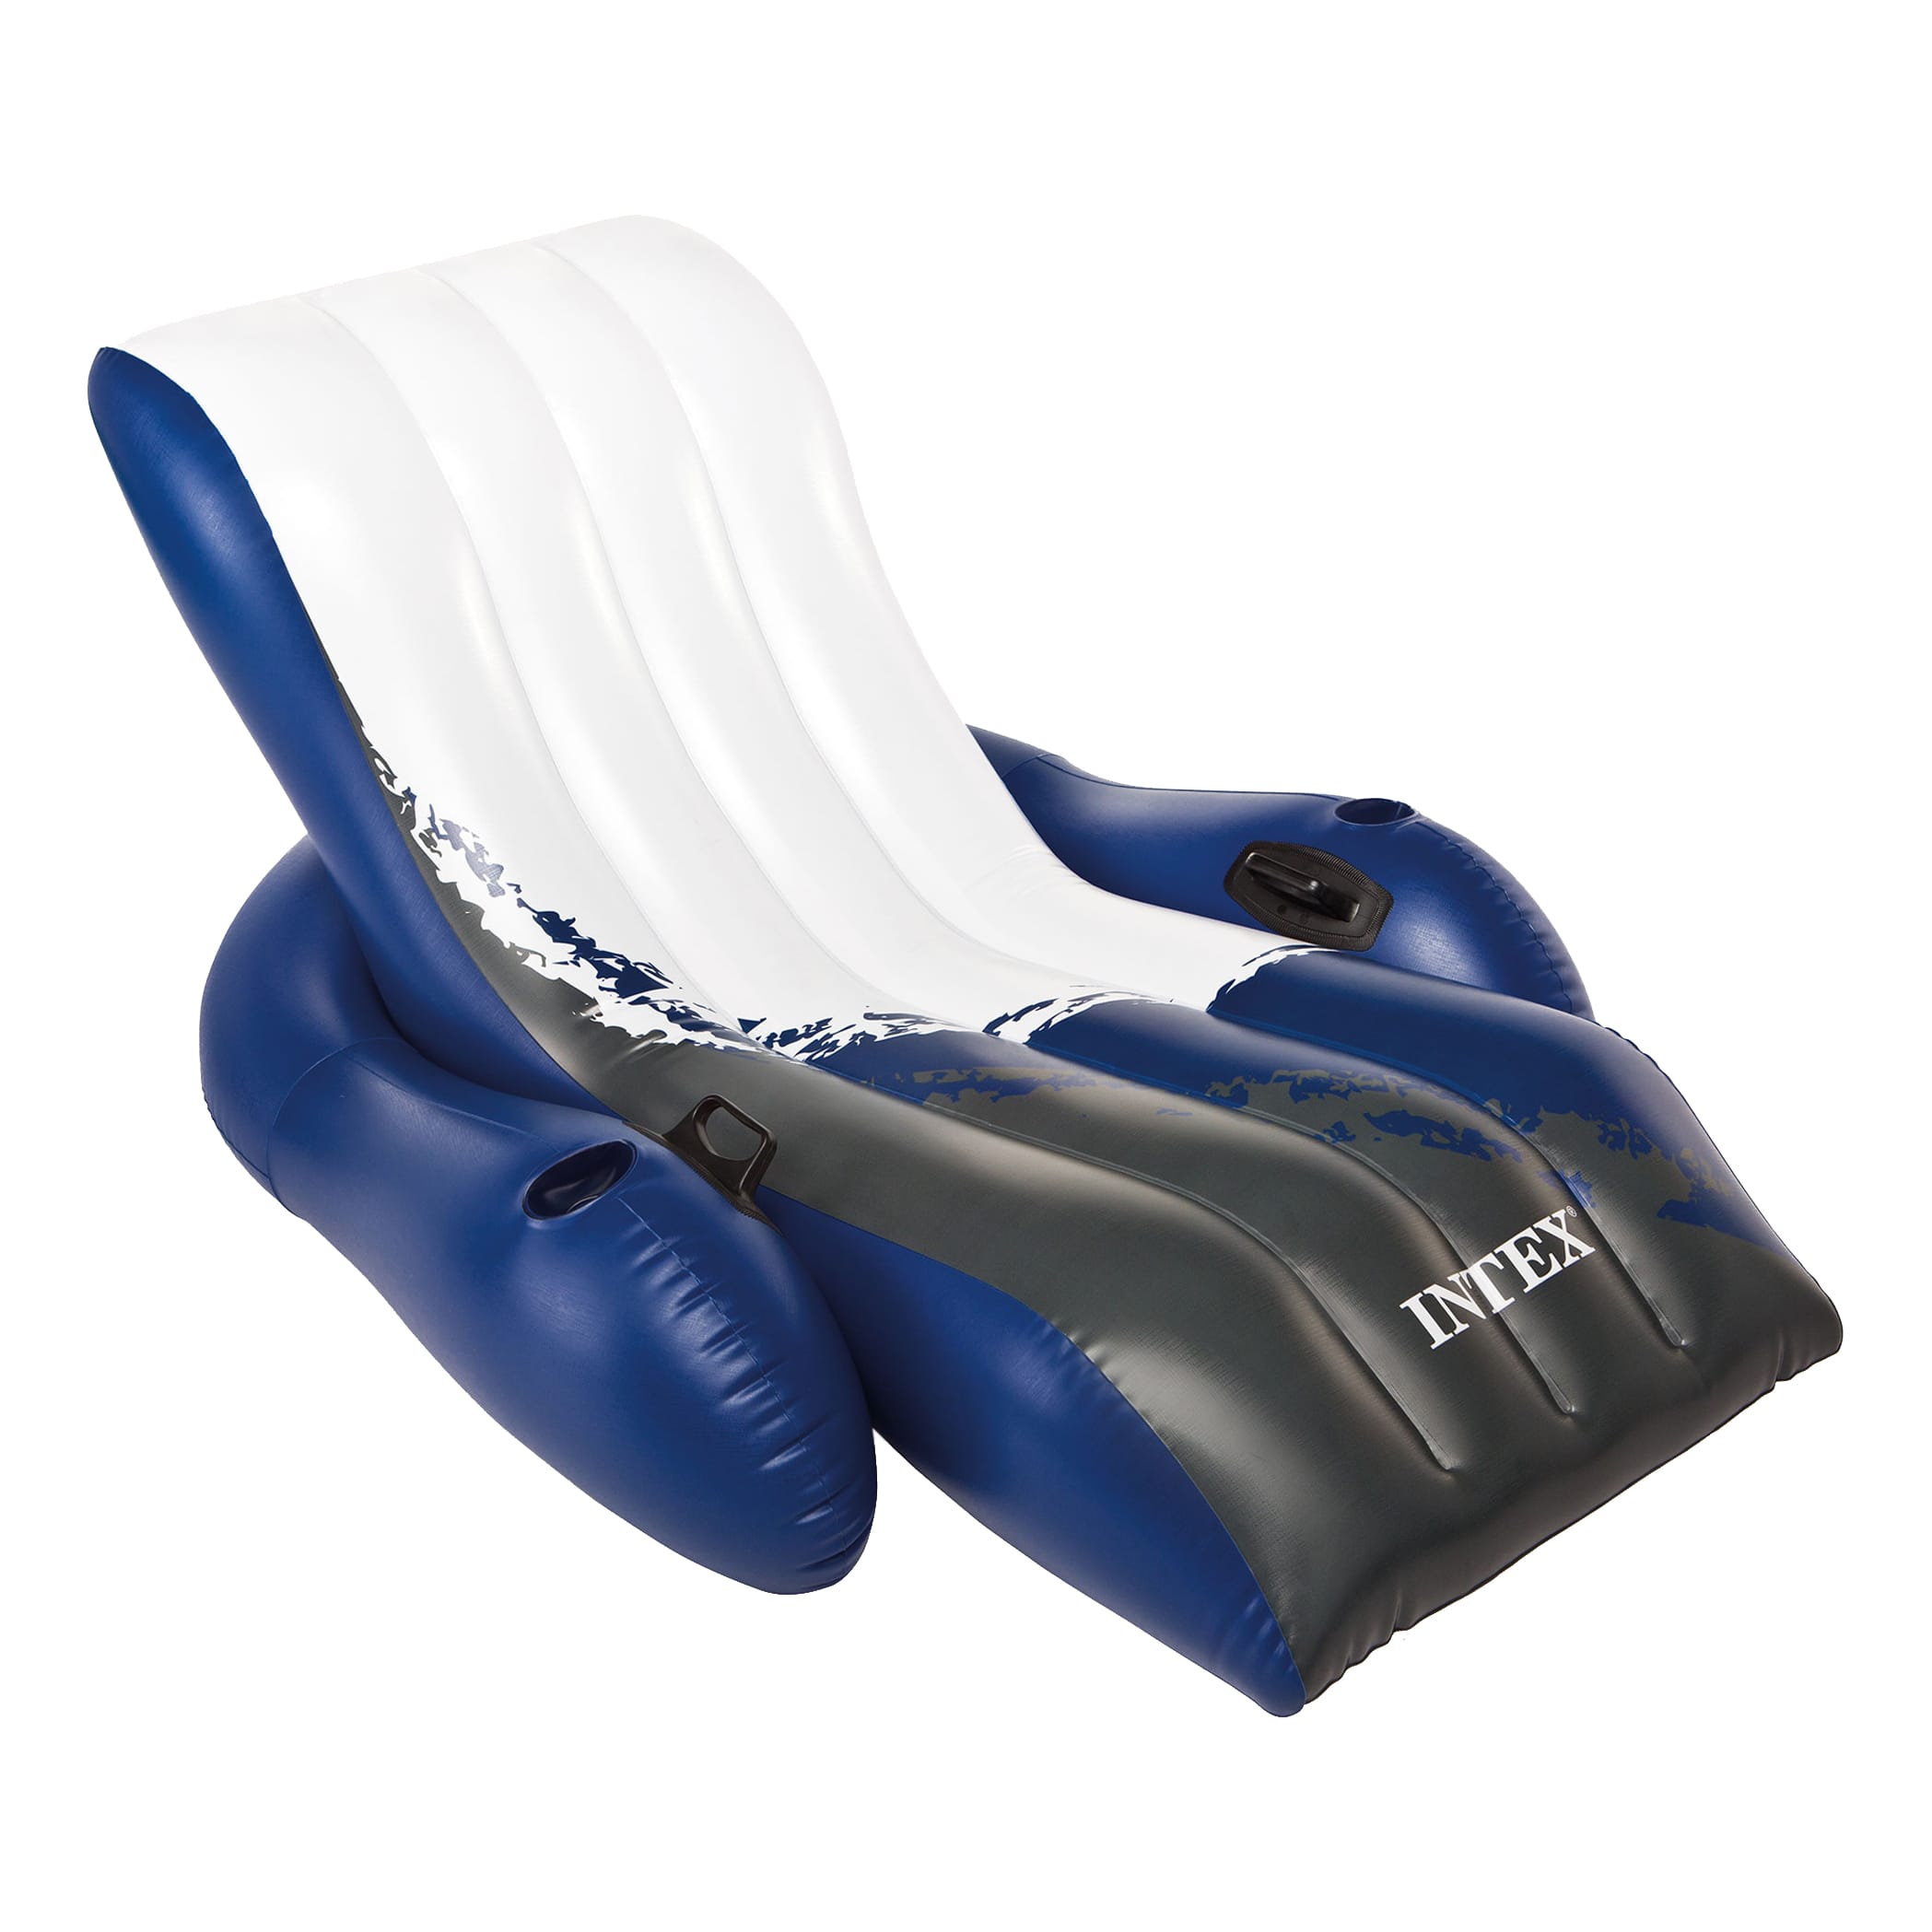 Intex® River Run II Inflatable Tube